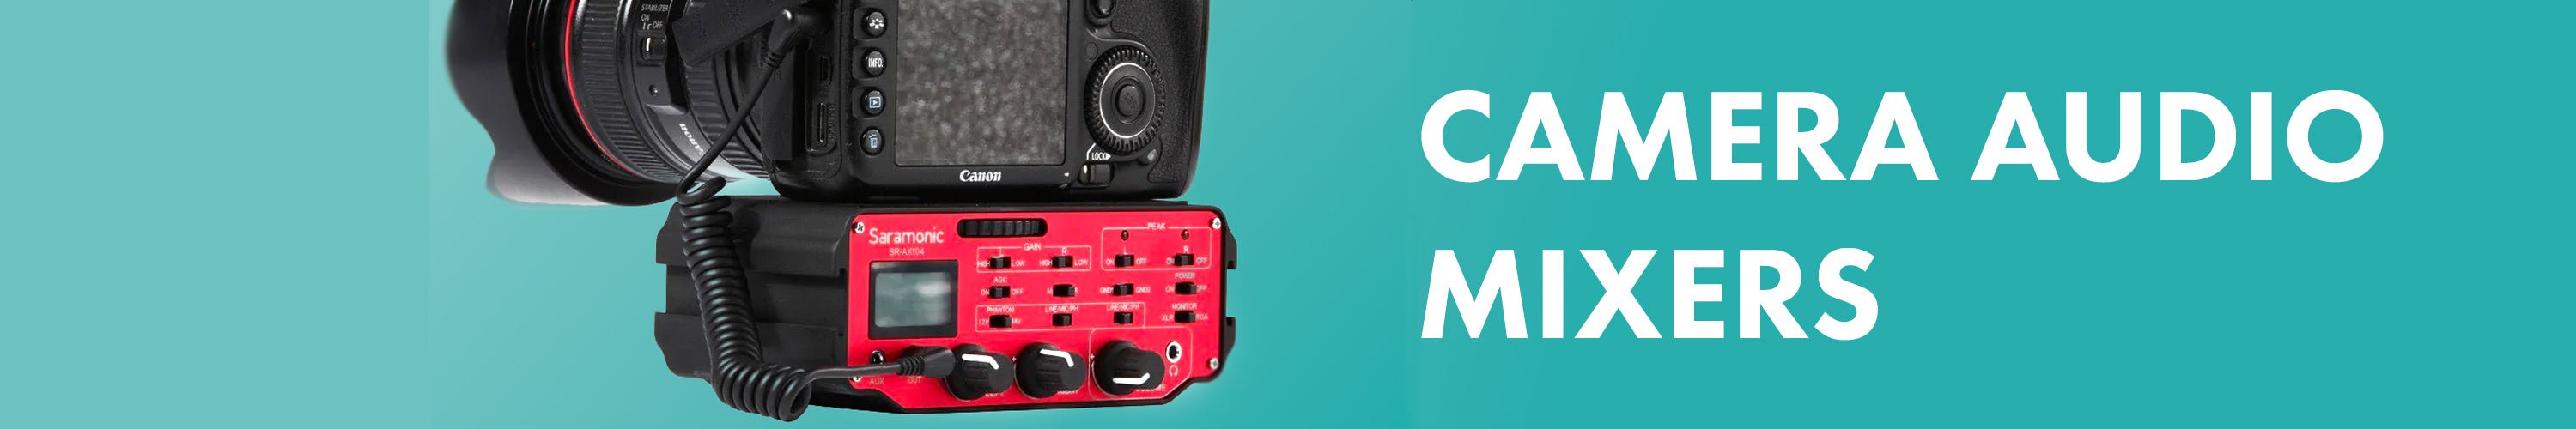 Camera Audio Mixers - Movo